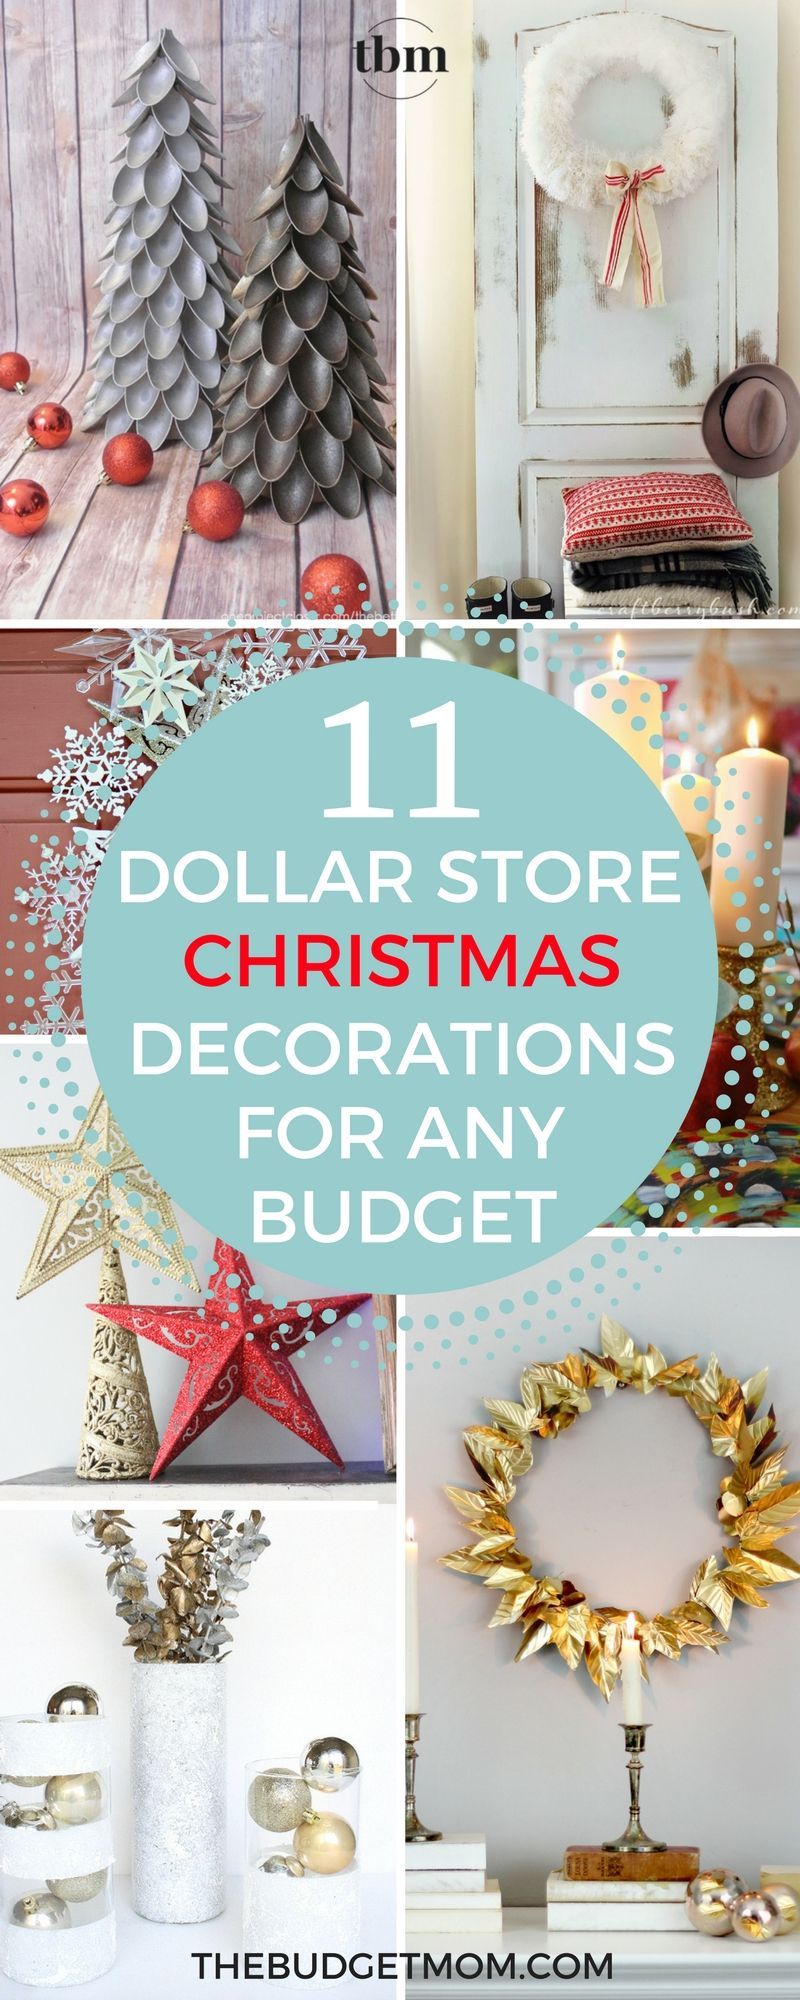 11 Glamorous Dollar Store Christmas Decorations for Any Budget -   19 diy christmas decorations for home cheap ideas